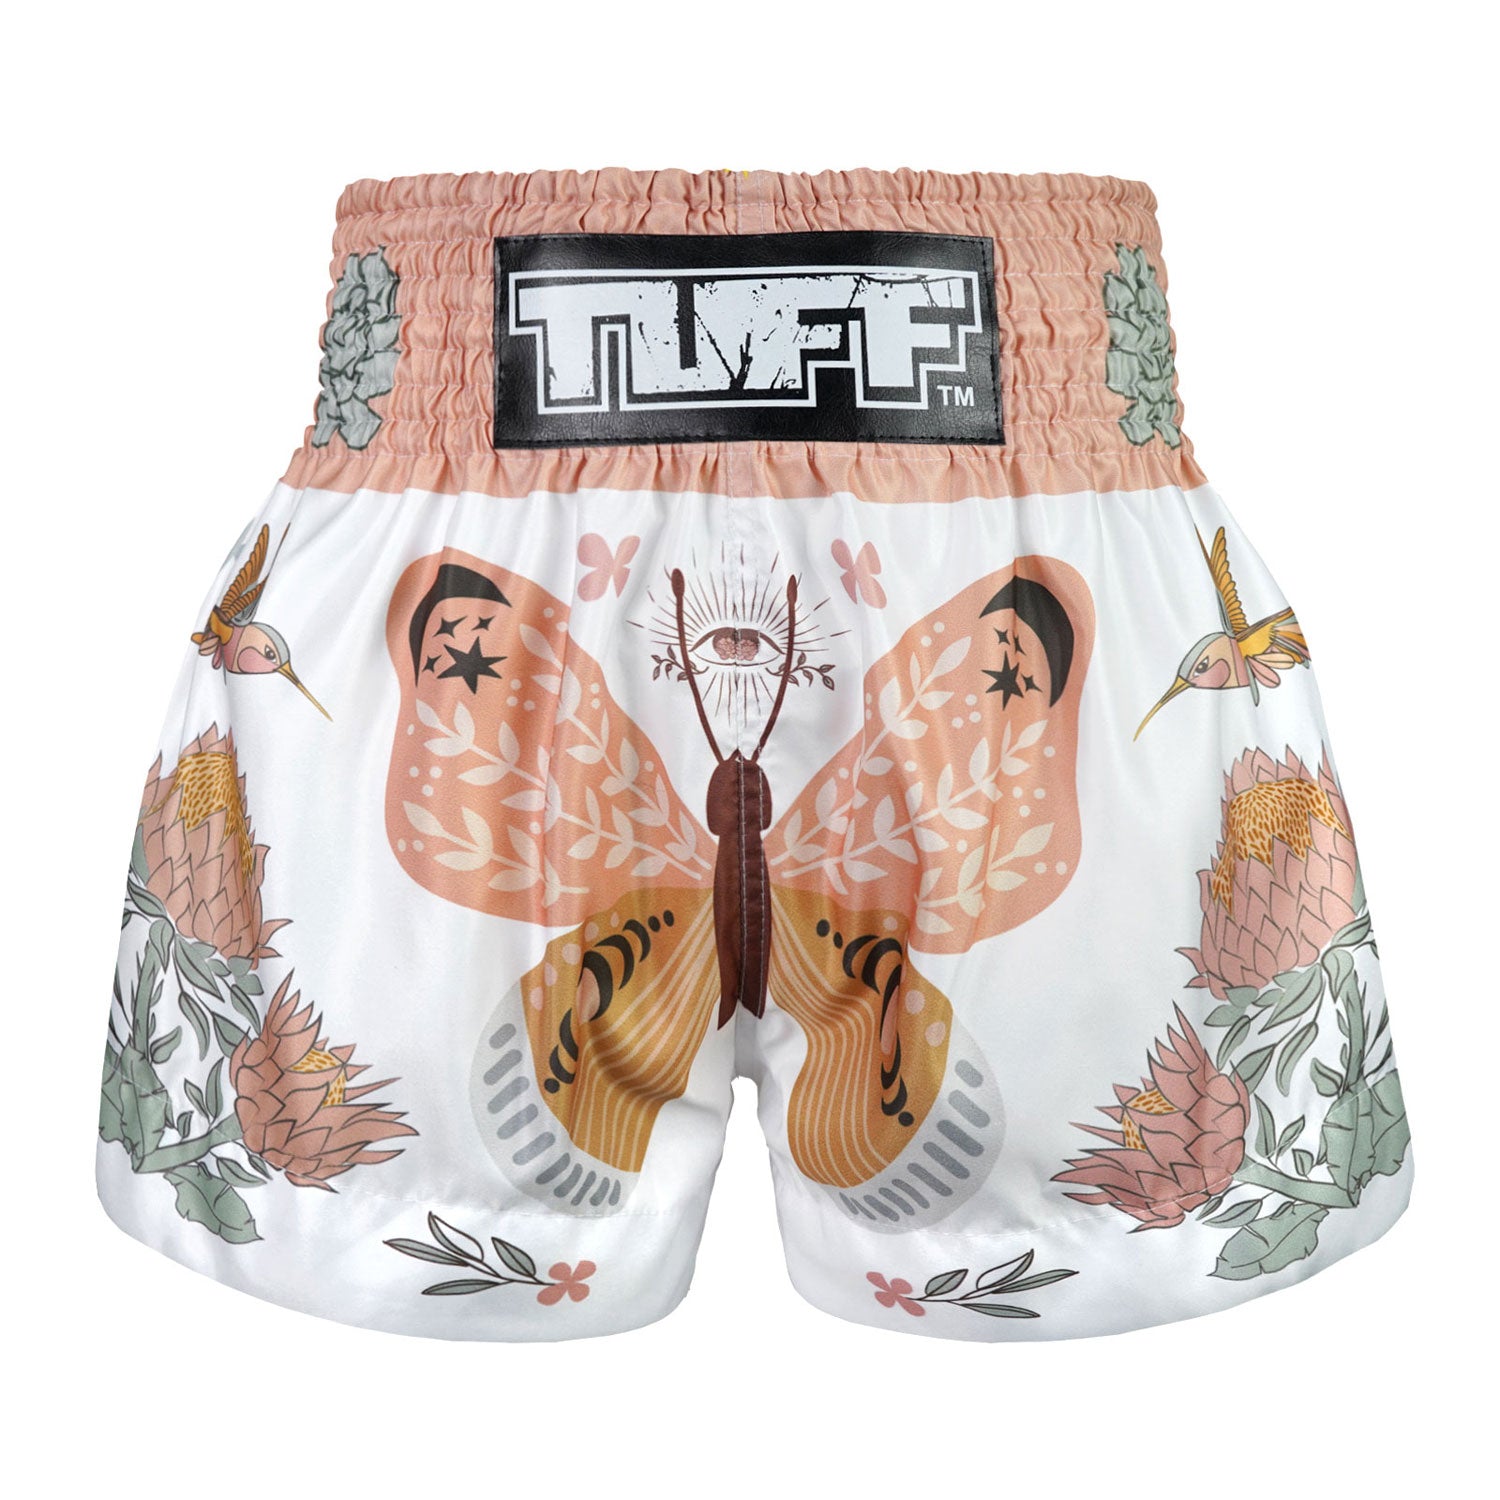 MS678 TUFF Muay Thai Shorts The Origin of Hope